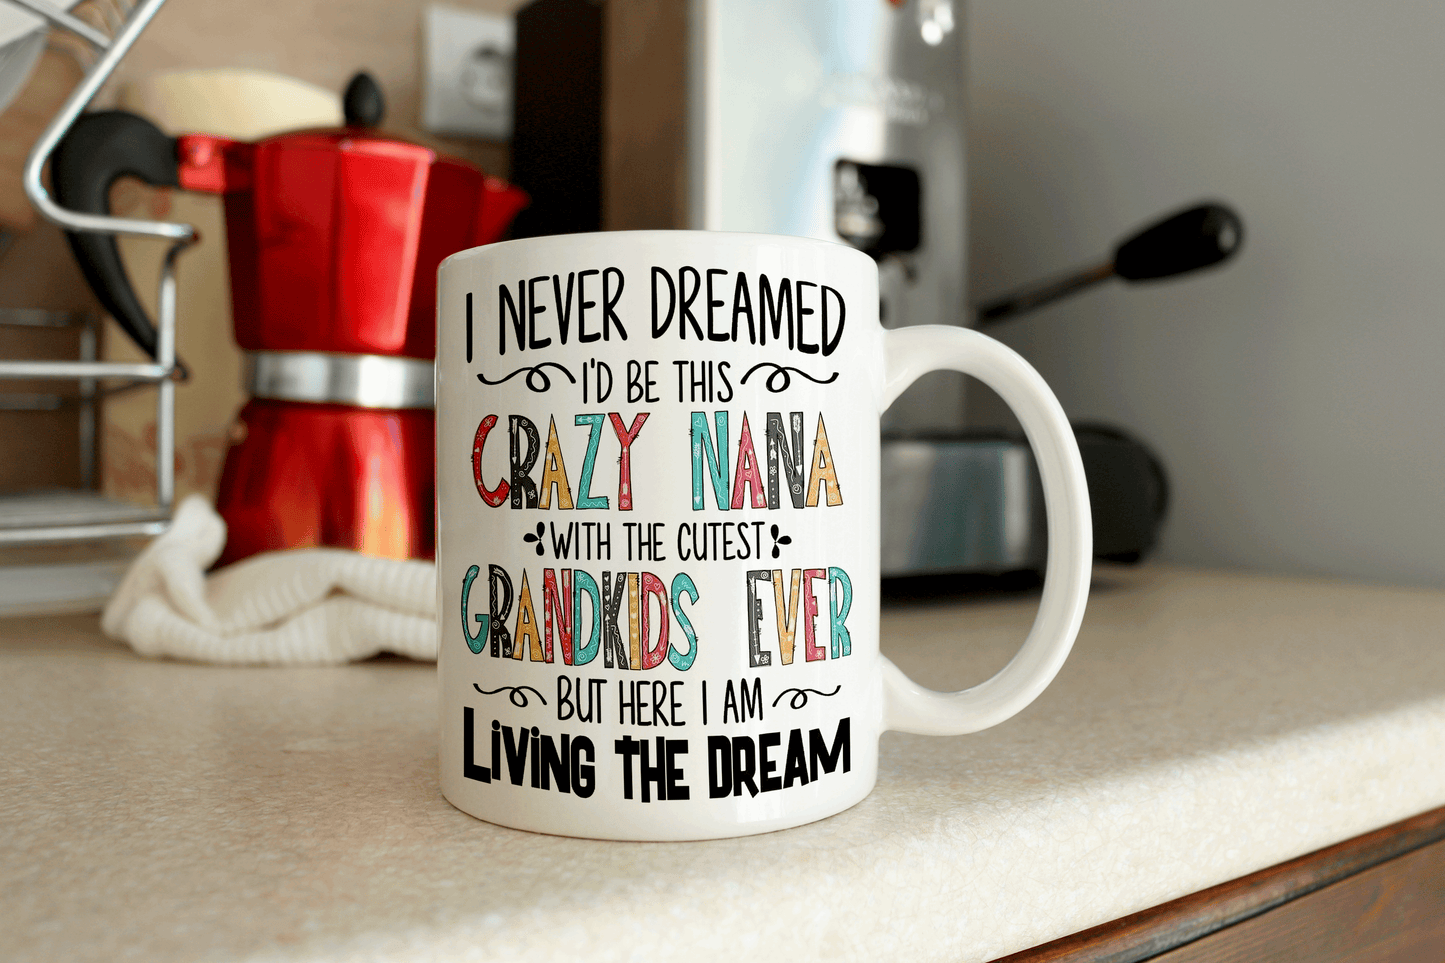  Crazy Nana Funny Coffee Mug by Free Spirit Accessories sold by Free Spirit Accessories